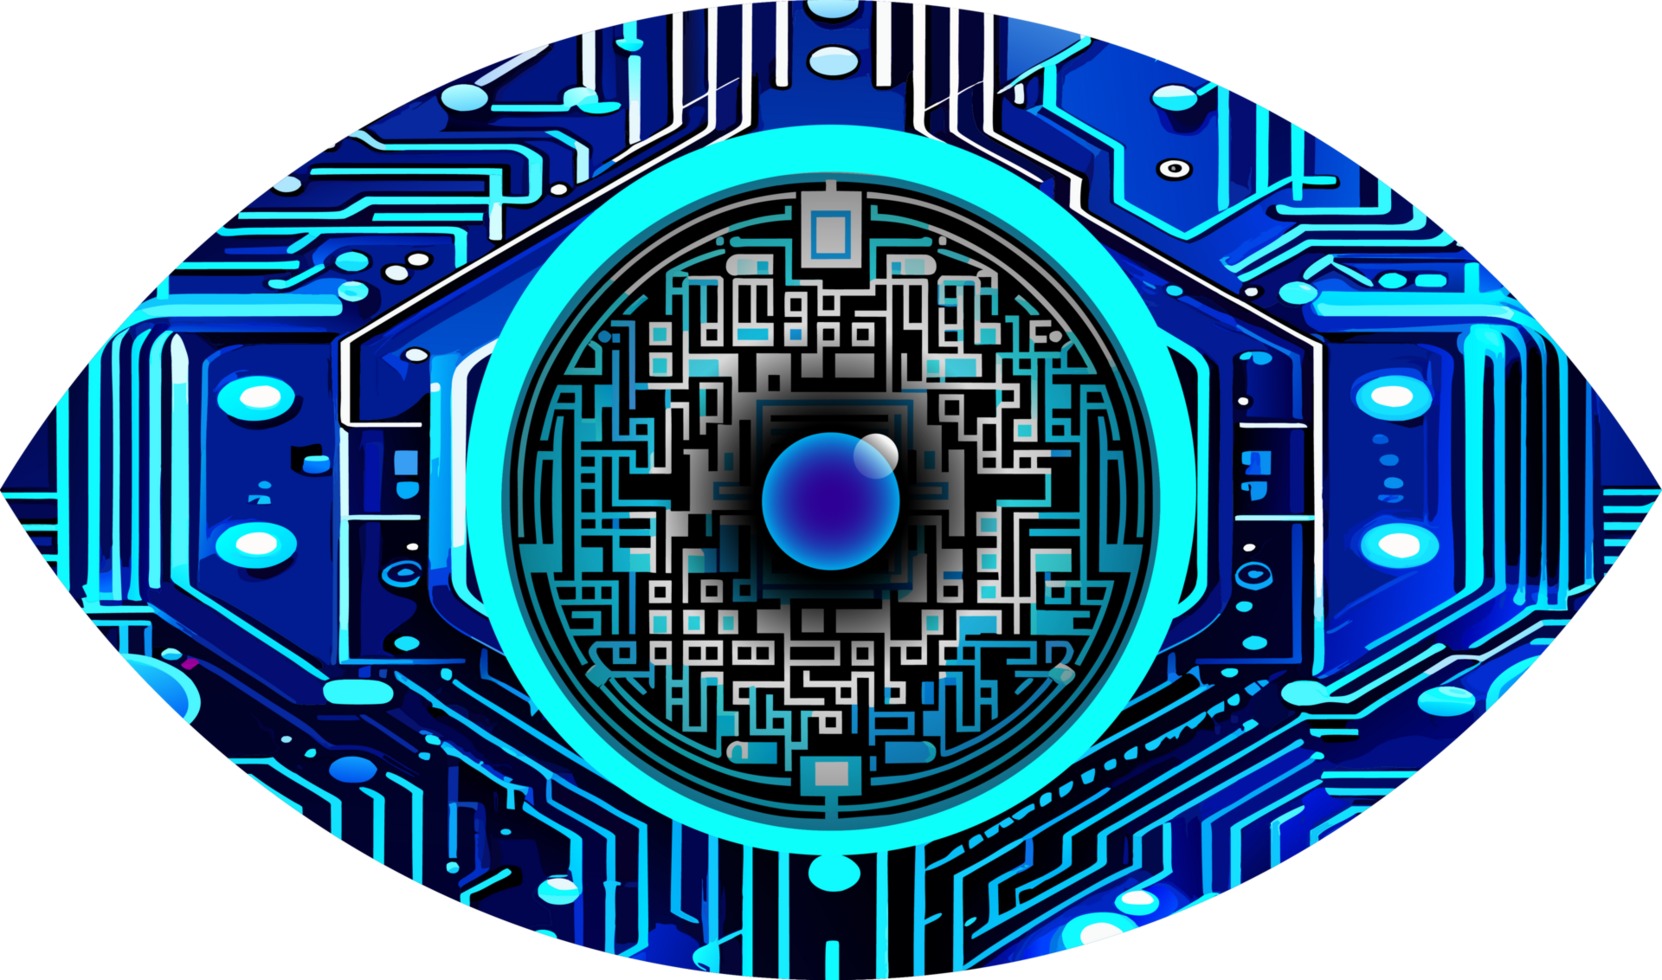 oeil cyber circuit futur technologie concept fond png